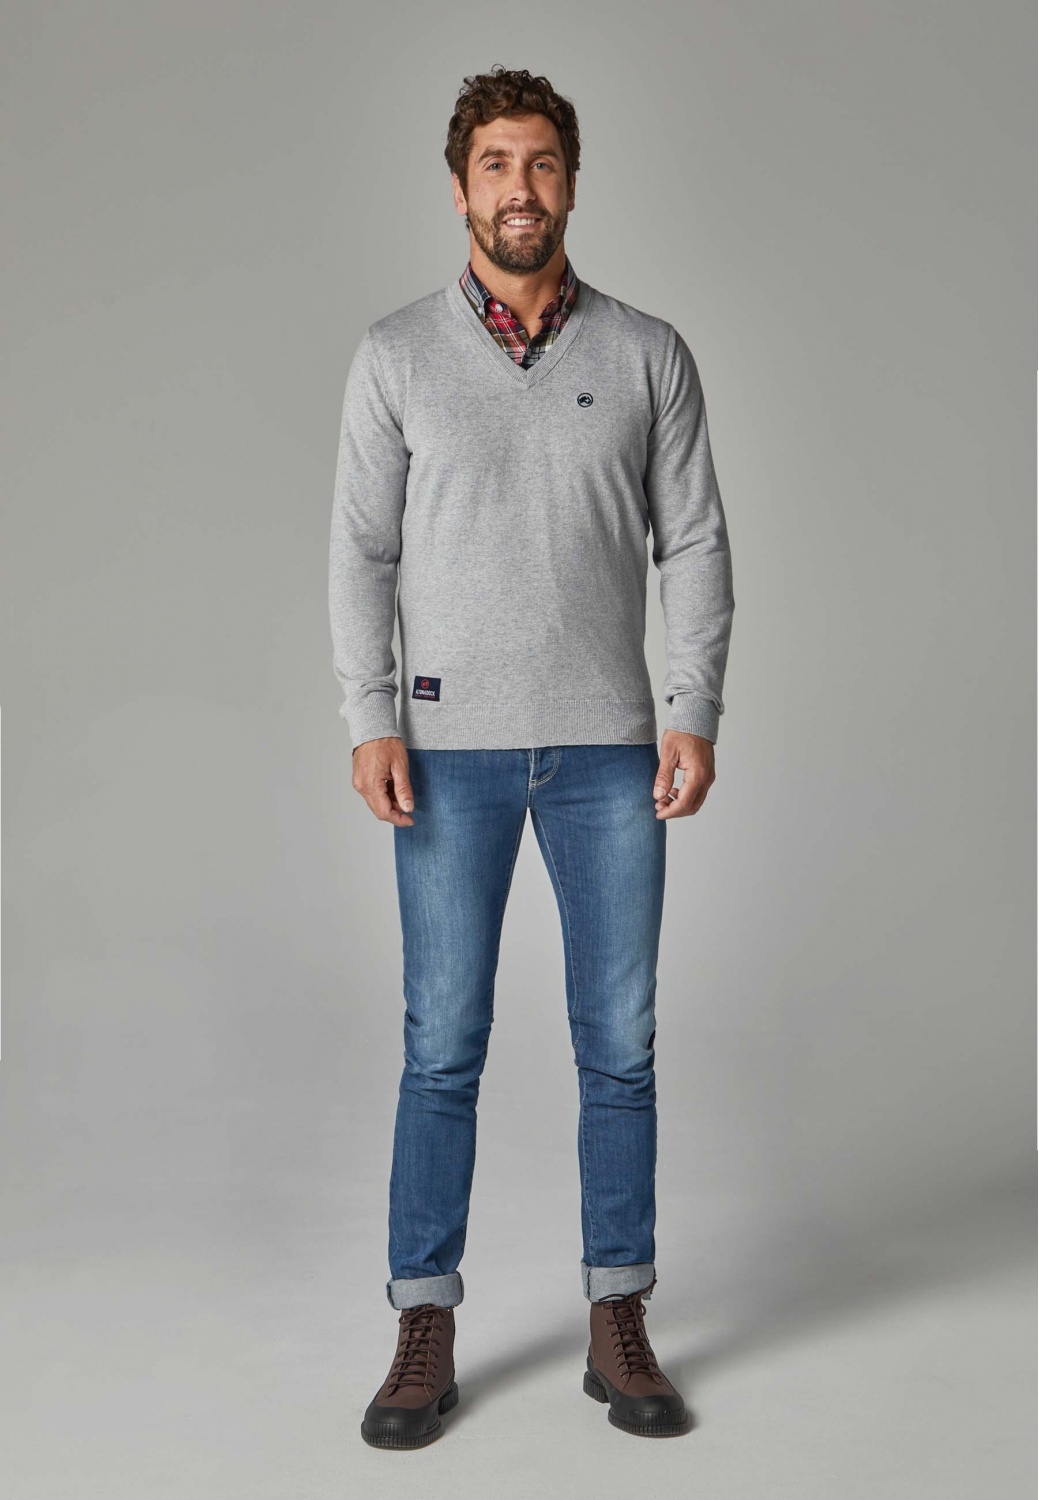 Men's pullover in grey colour with V-neck Altonadock